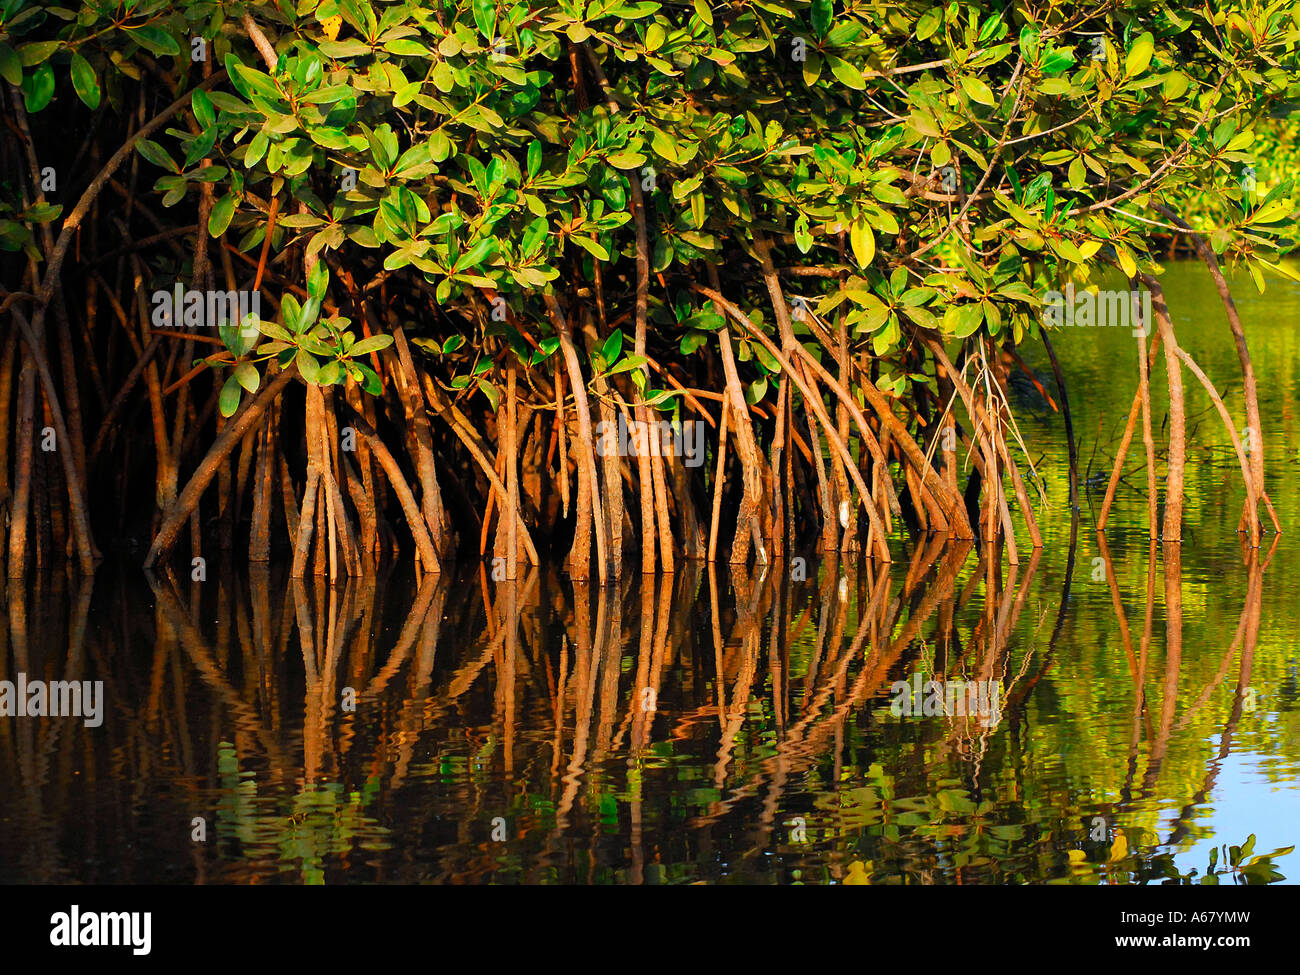 Nella foresta di mangrovie - riflessione di radici e rami, Gambia, Africa Foto Stock